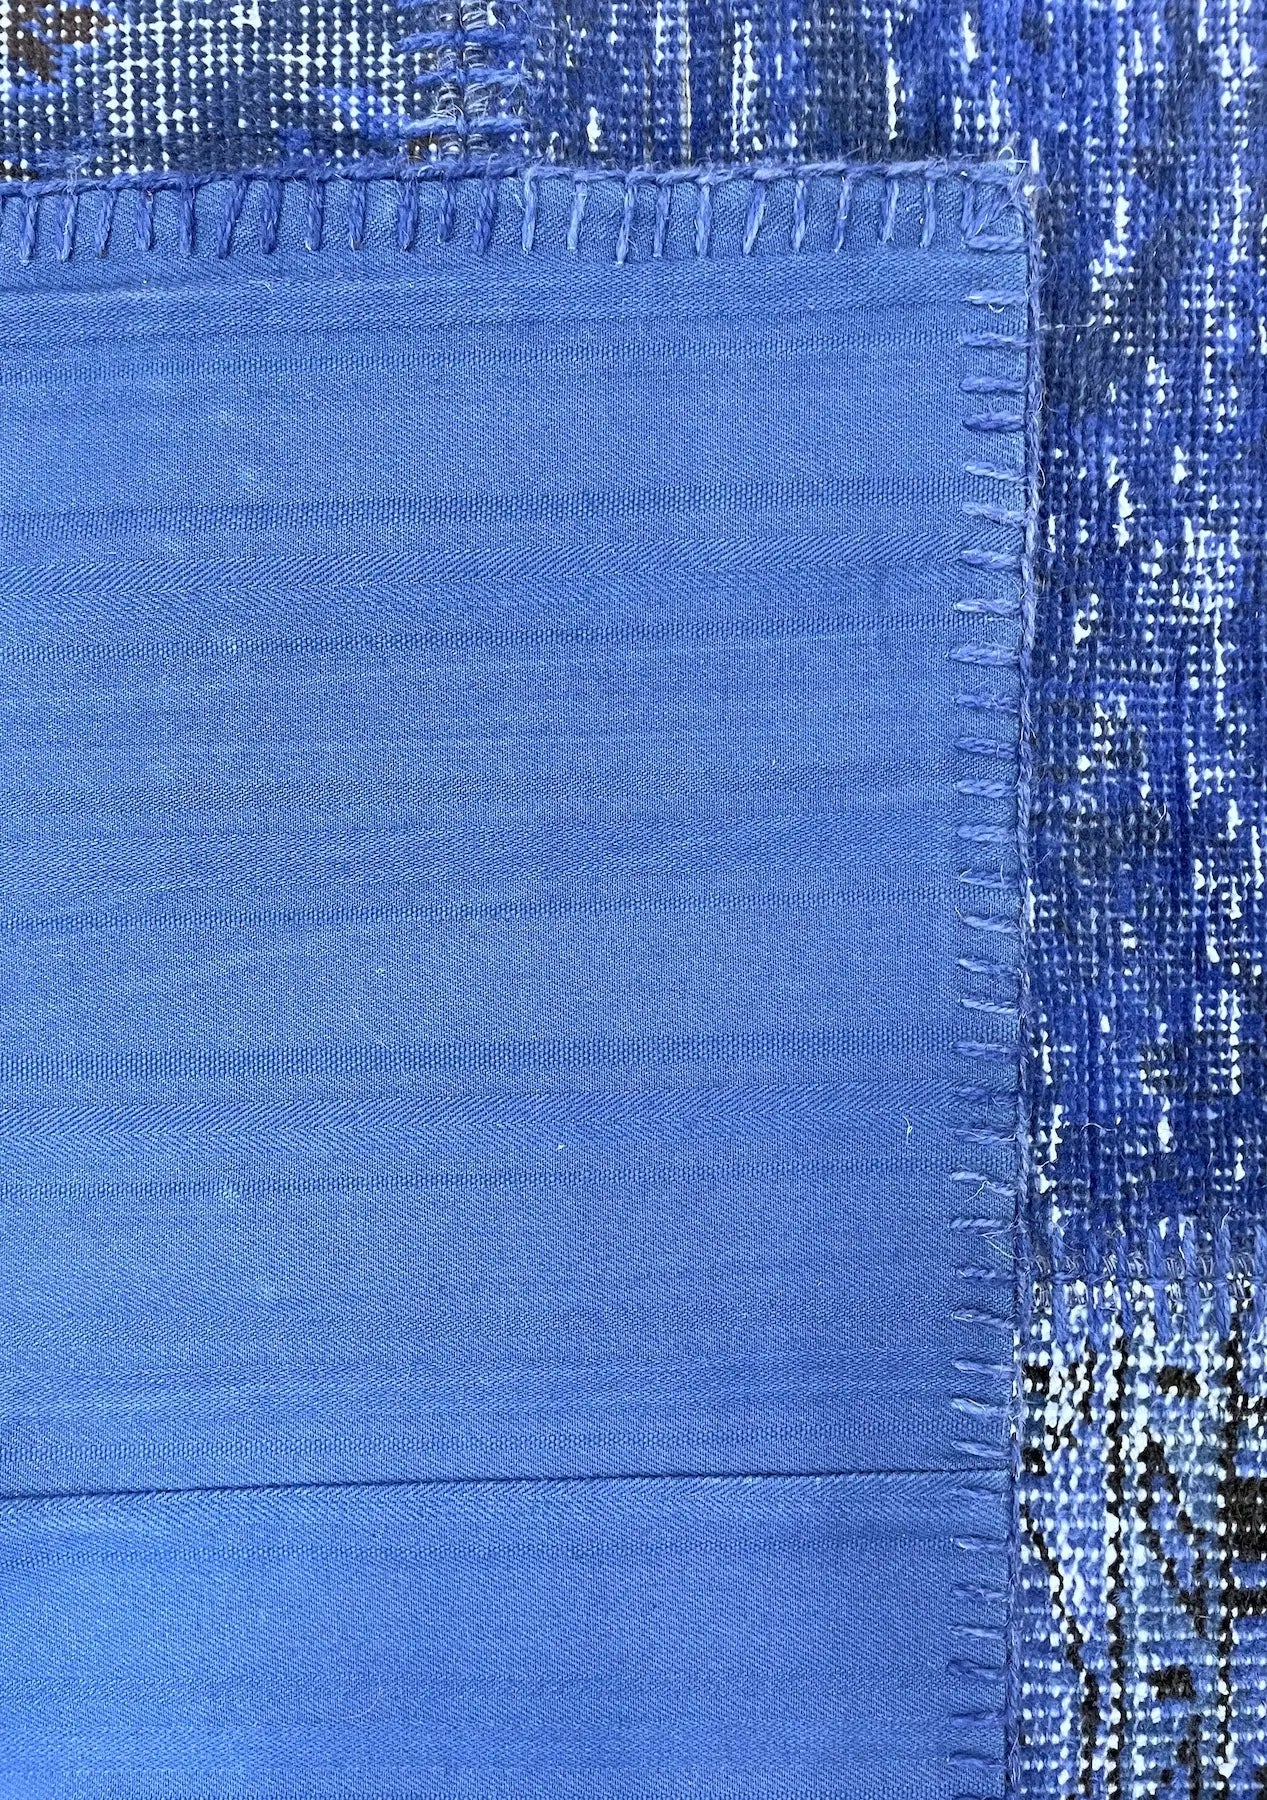 Baraball - Vintage Blue Patchwork Rug - kudenrugs